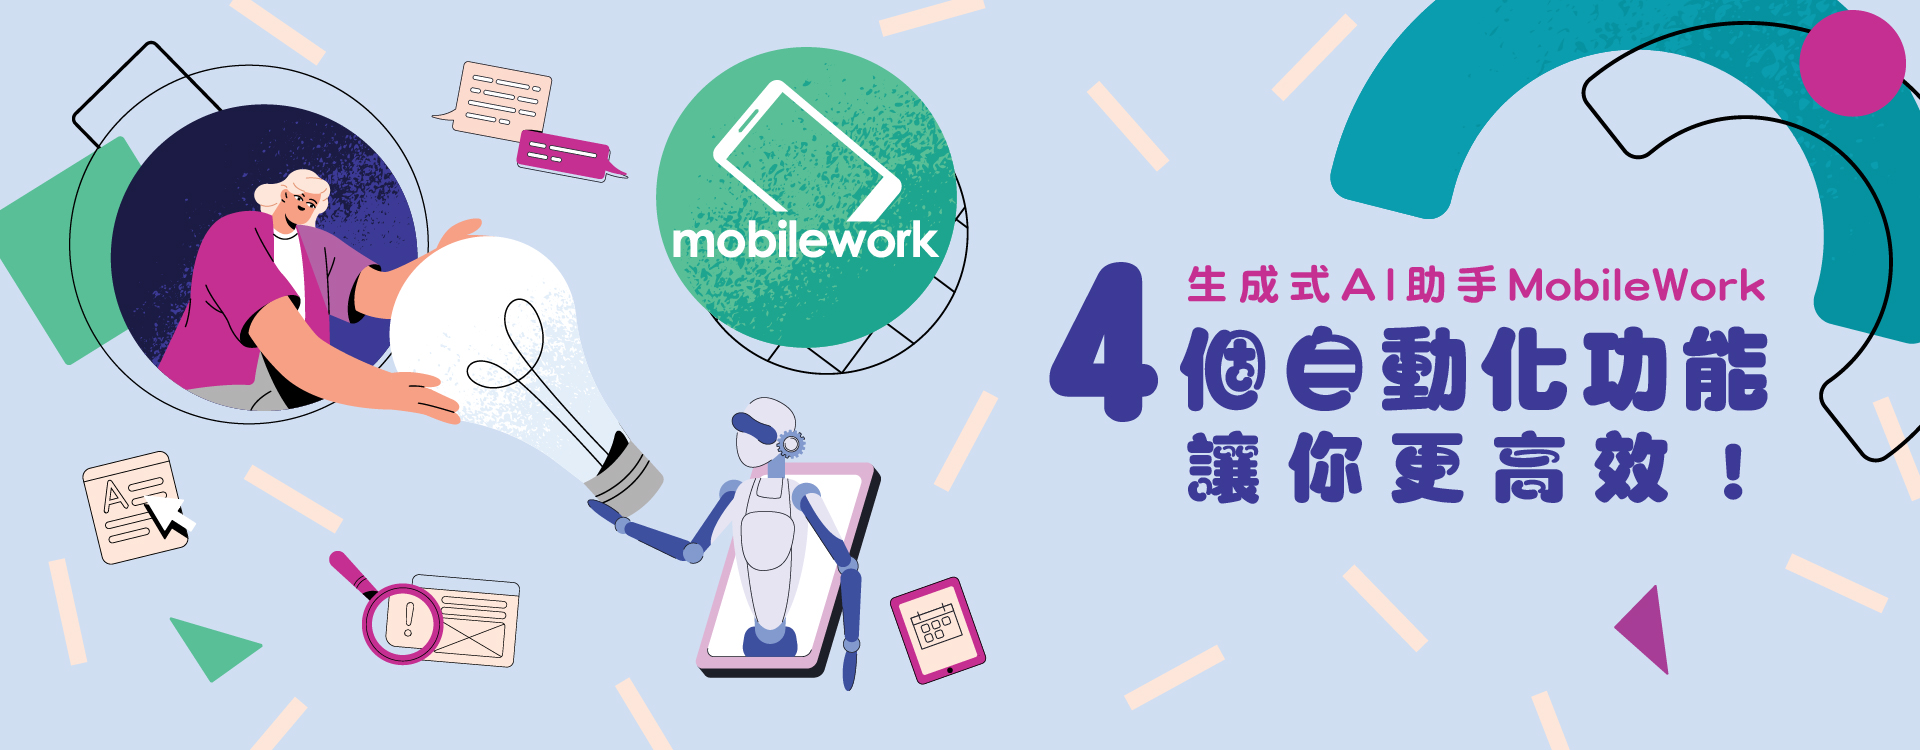 MobileWork AI_banner TC